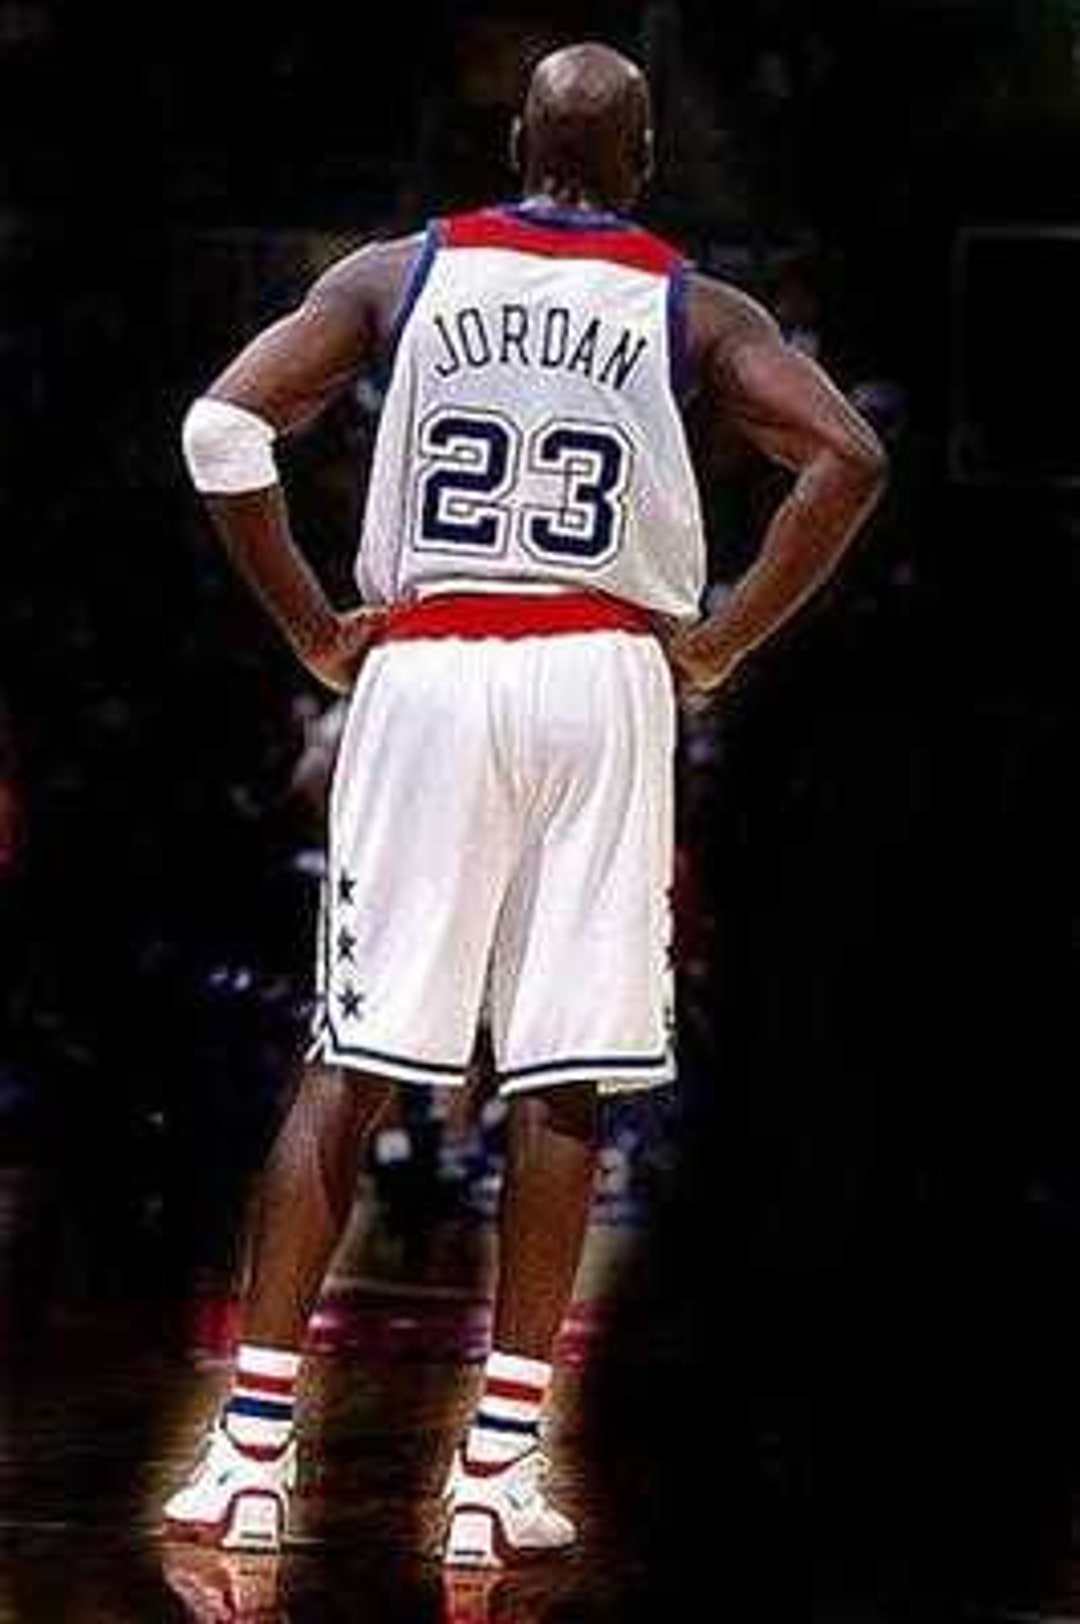 Michael Jordan Washington Wizards Memorabilia, Michael Jordan Collectibles,  Wizards Verified Signed Michael Jordan Photos